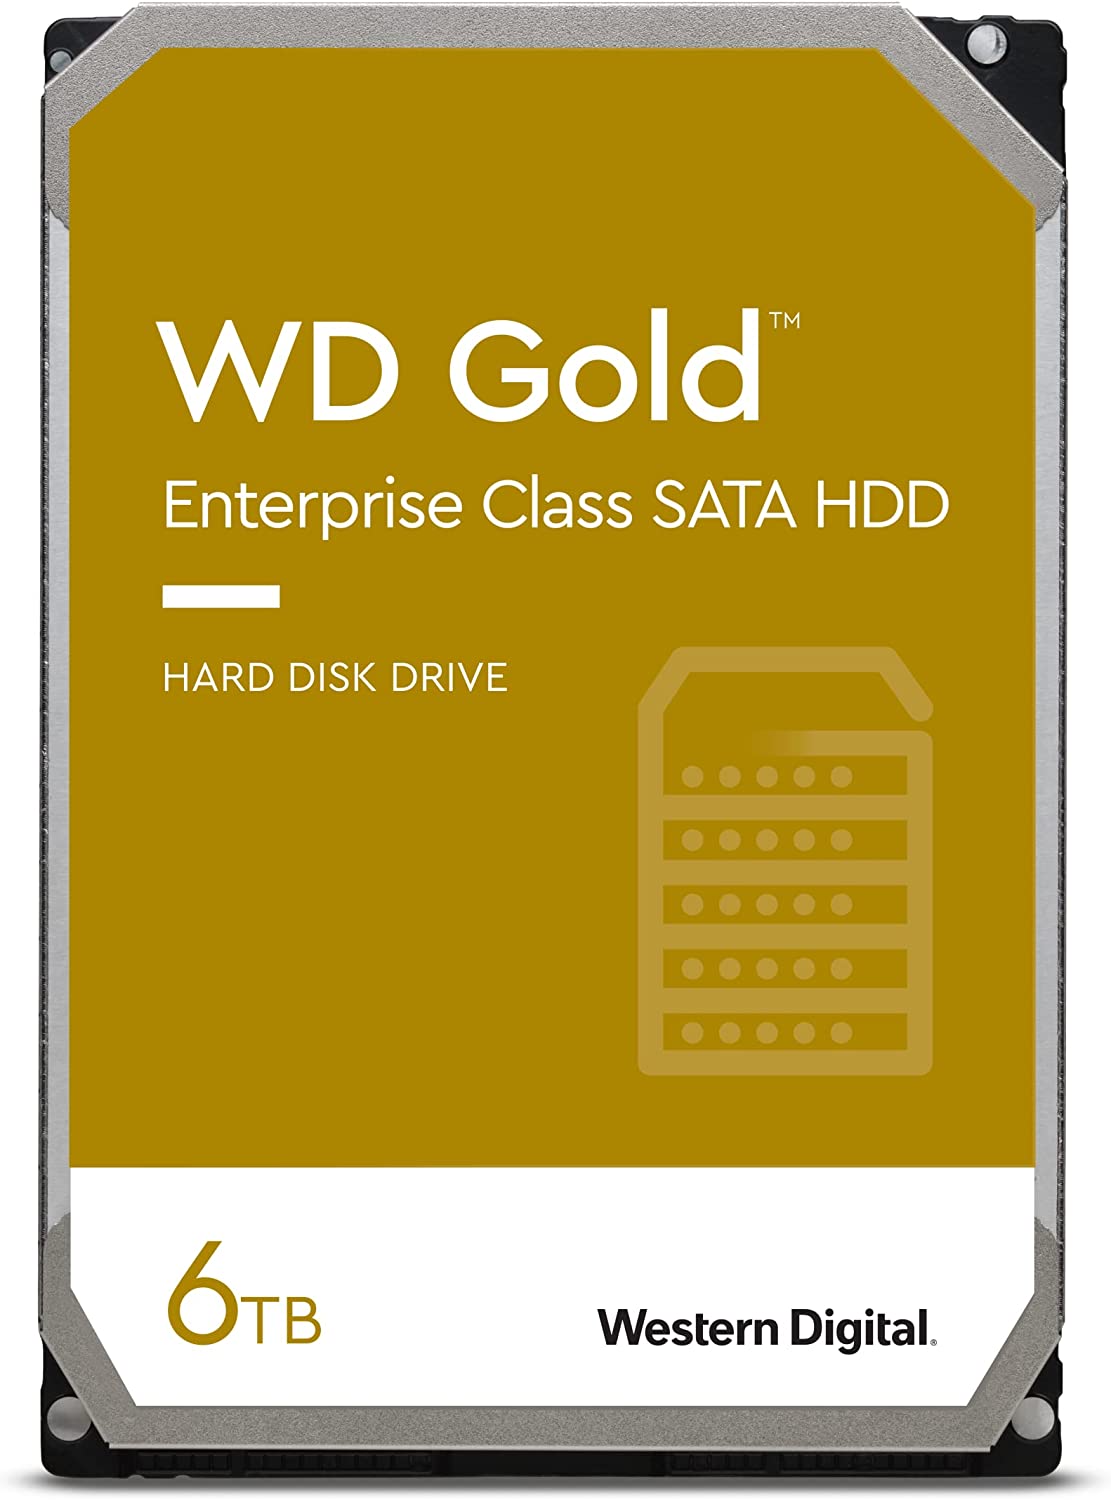 Storage - Internal Disk/Western Digital: Western, Digital, 6TB, WD, Gold, Enterprise, Class, Internal, Hard, Drive, -, 7200, RPM, Class, SATA, 6, Gb/s, 256, MB, Cache, 3.5, -, 5, 